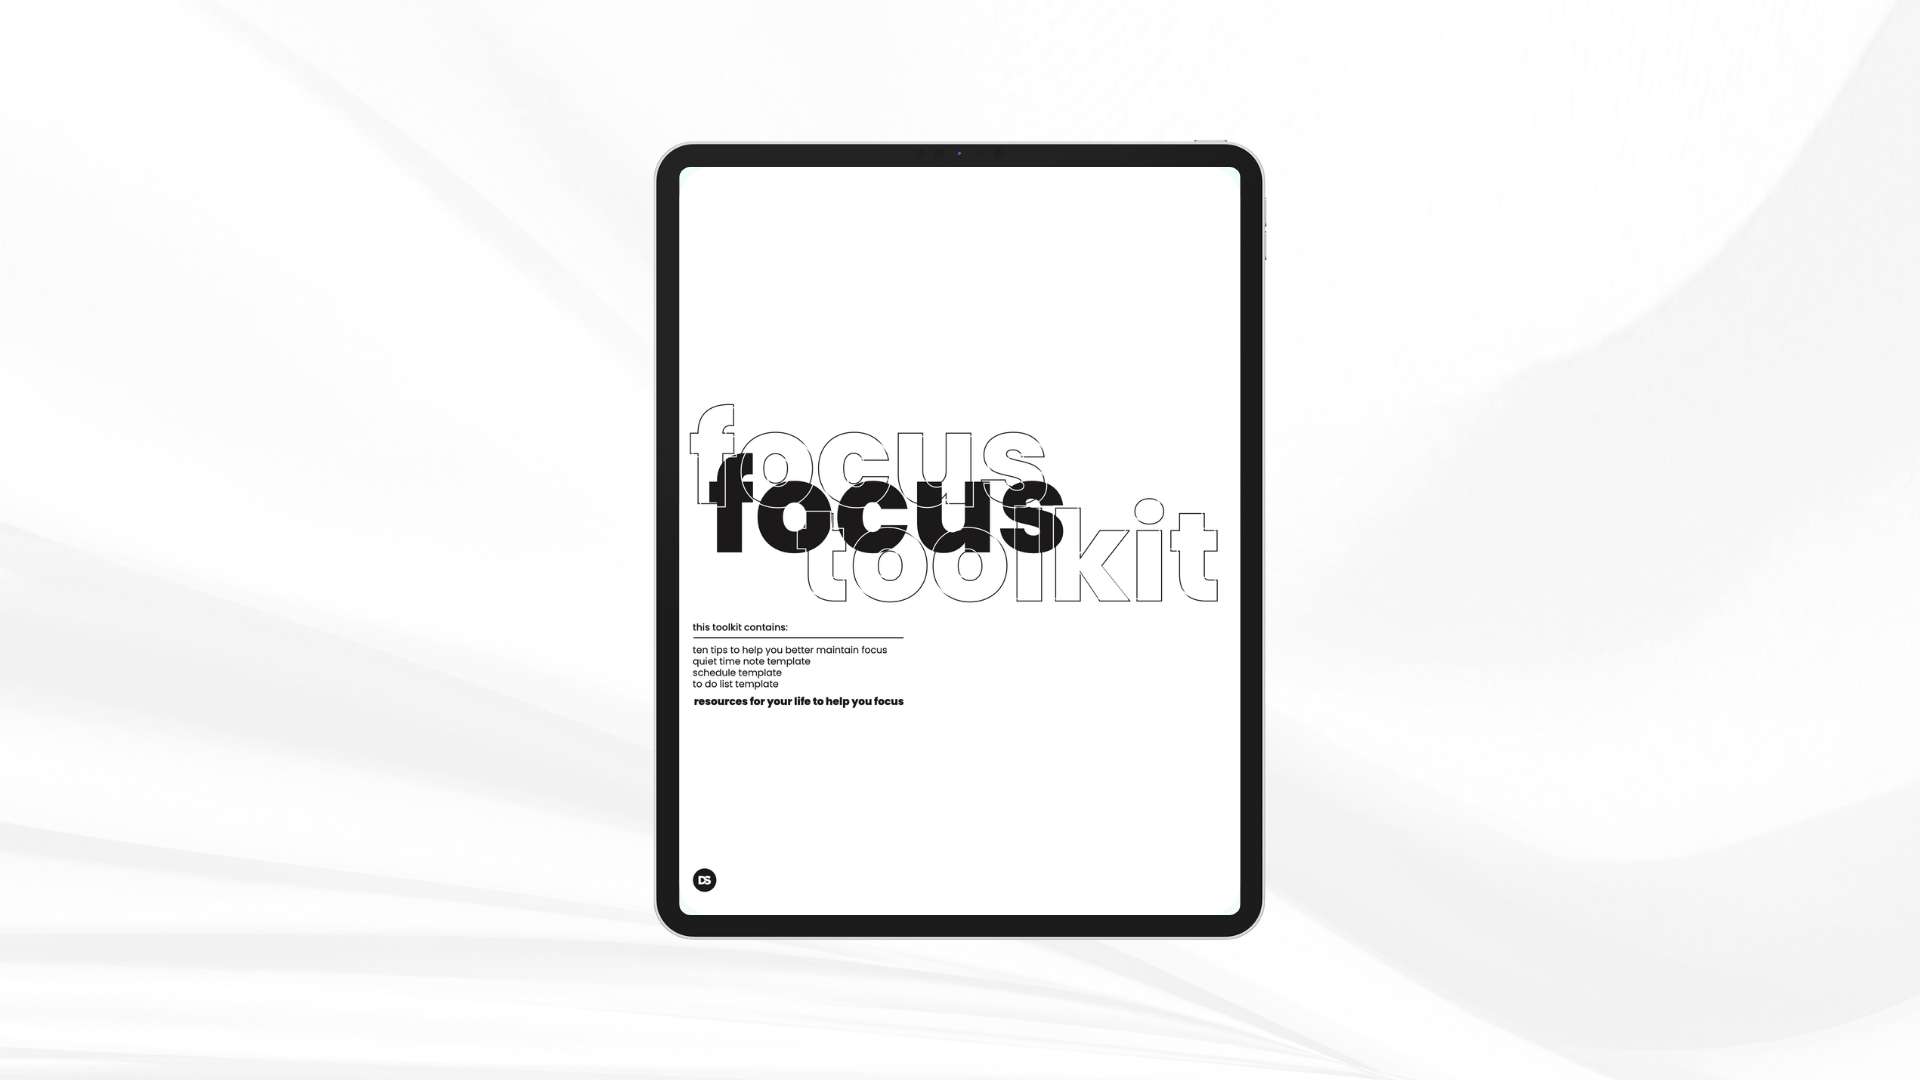 The Focus Toolkit 5